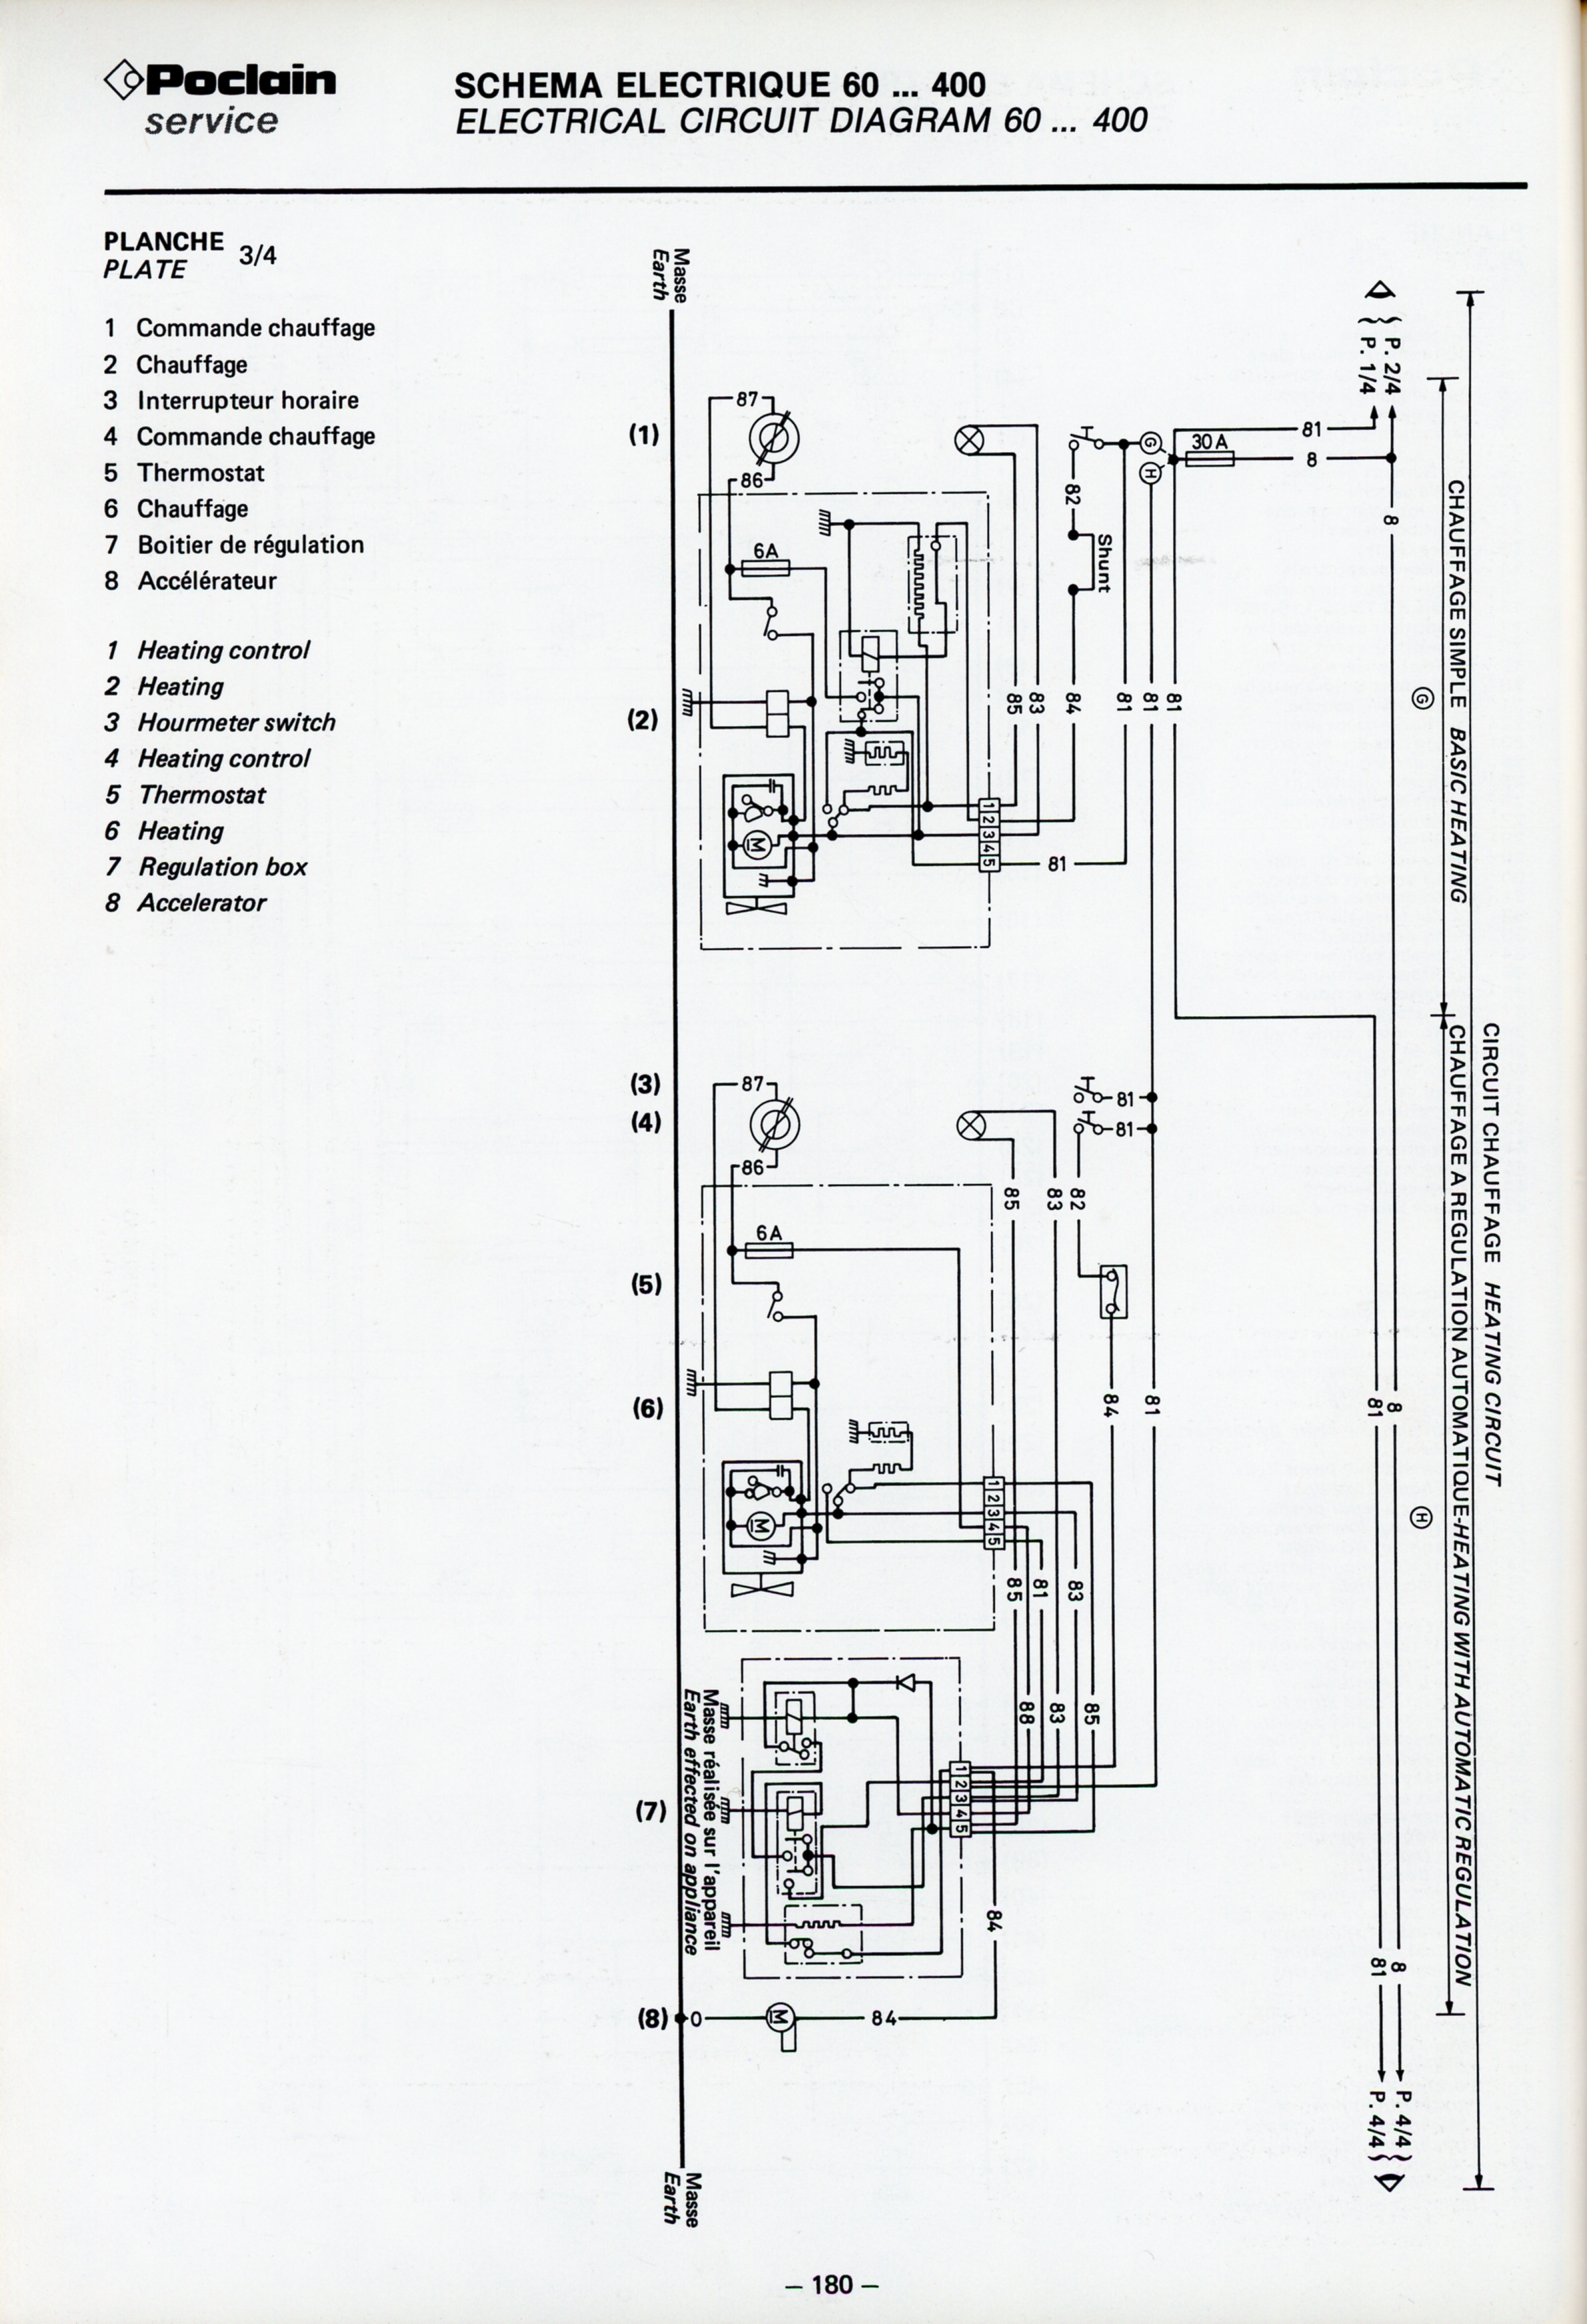 COL NIALCOP-1982-180.jpg